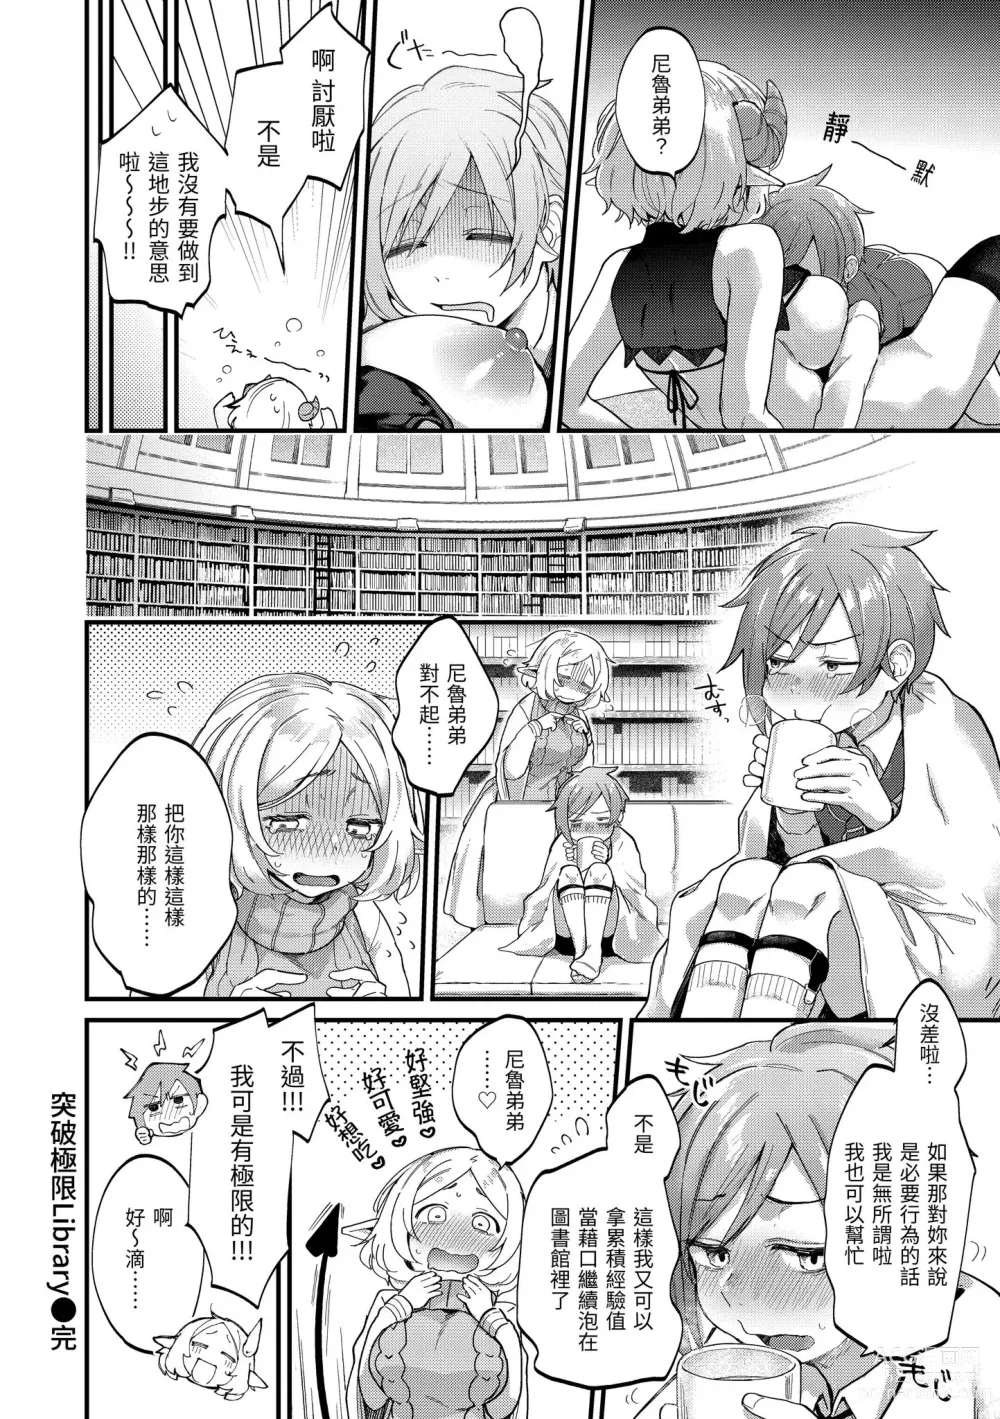 Page 178 of manga 直到你明白什麼是喜歡 (decensored)